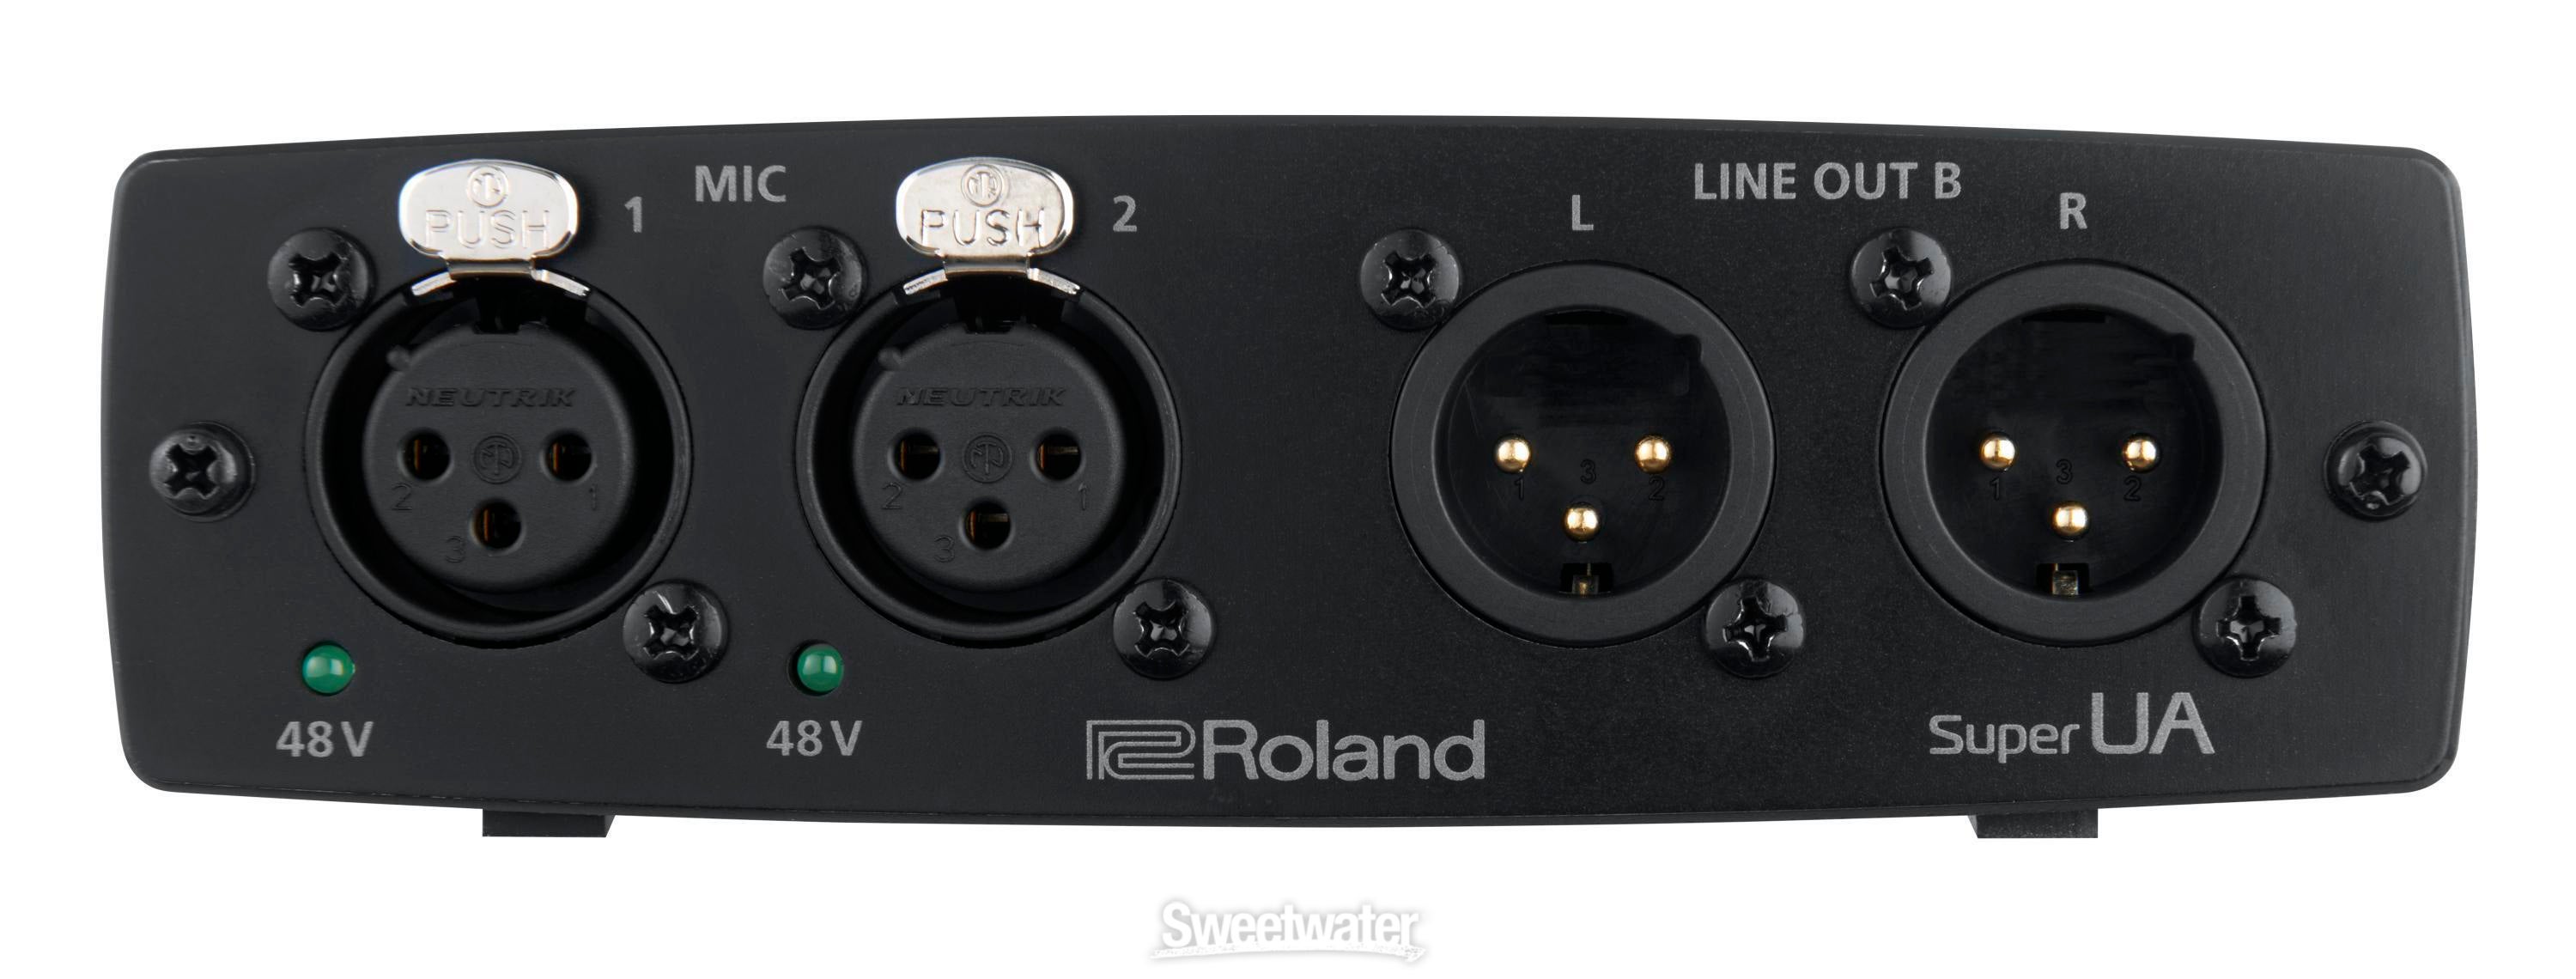 Roland Super UA USB Audio Interface | Sweetwater